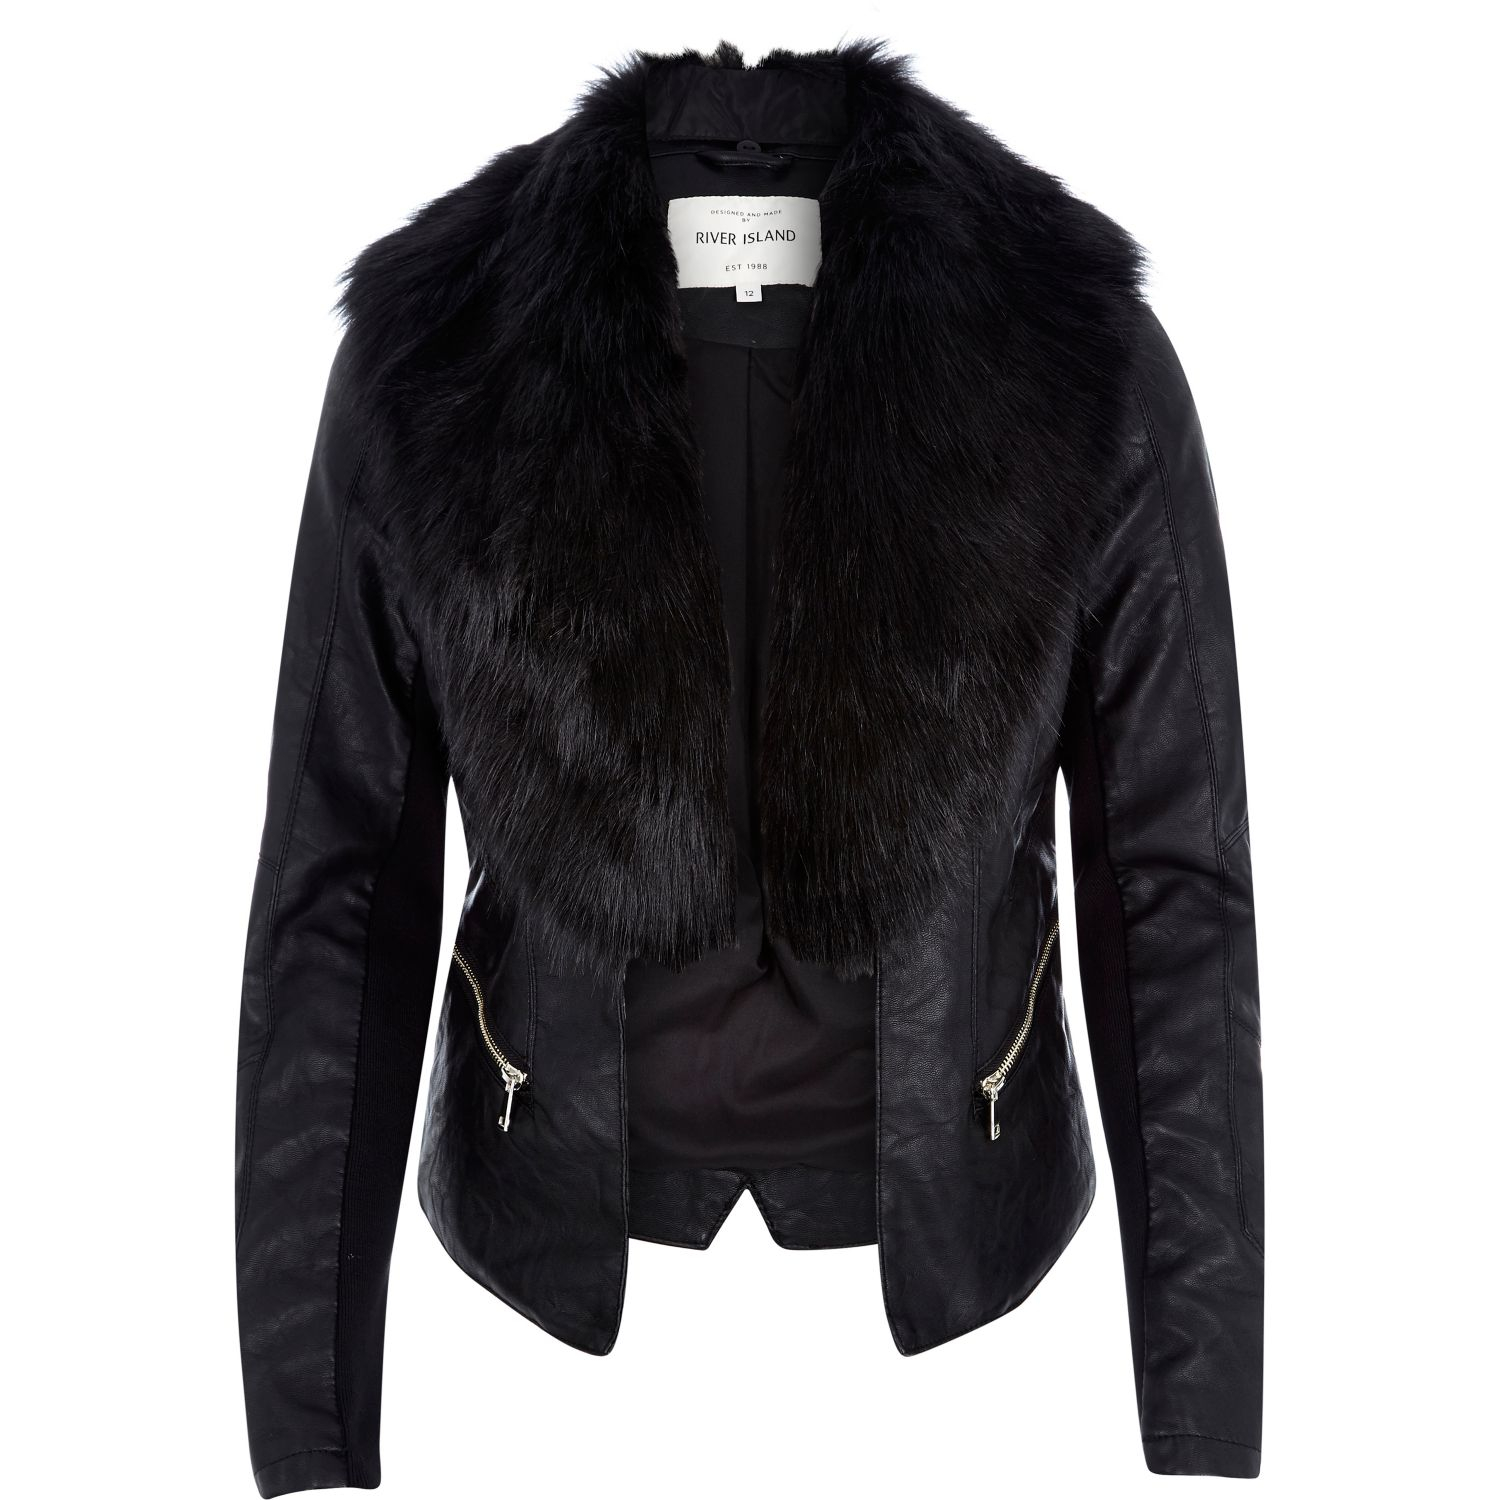 River island black leather look bomber jacket – Modern fashion ...